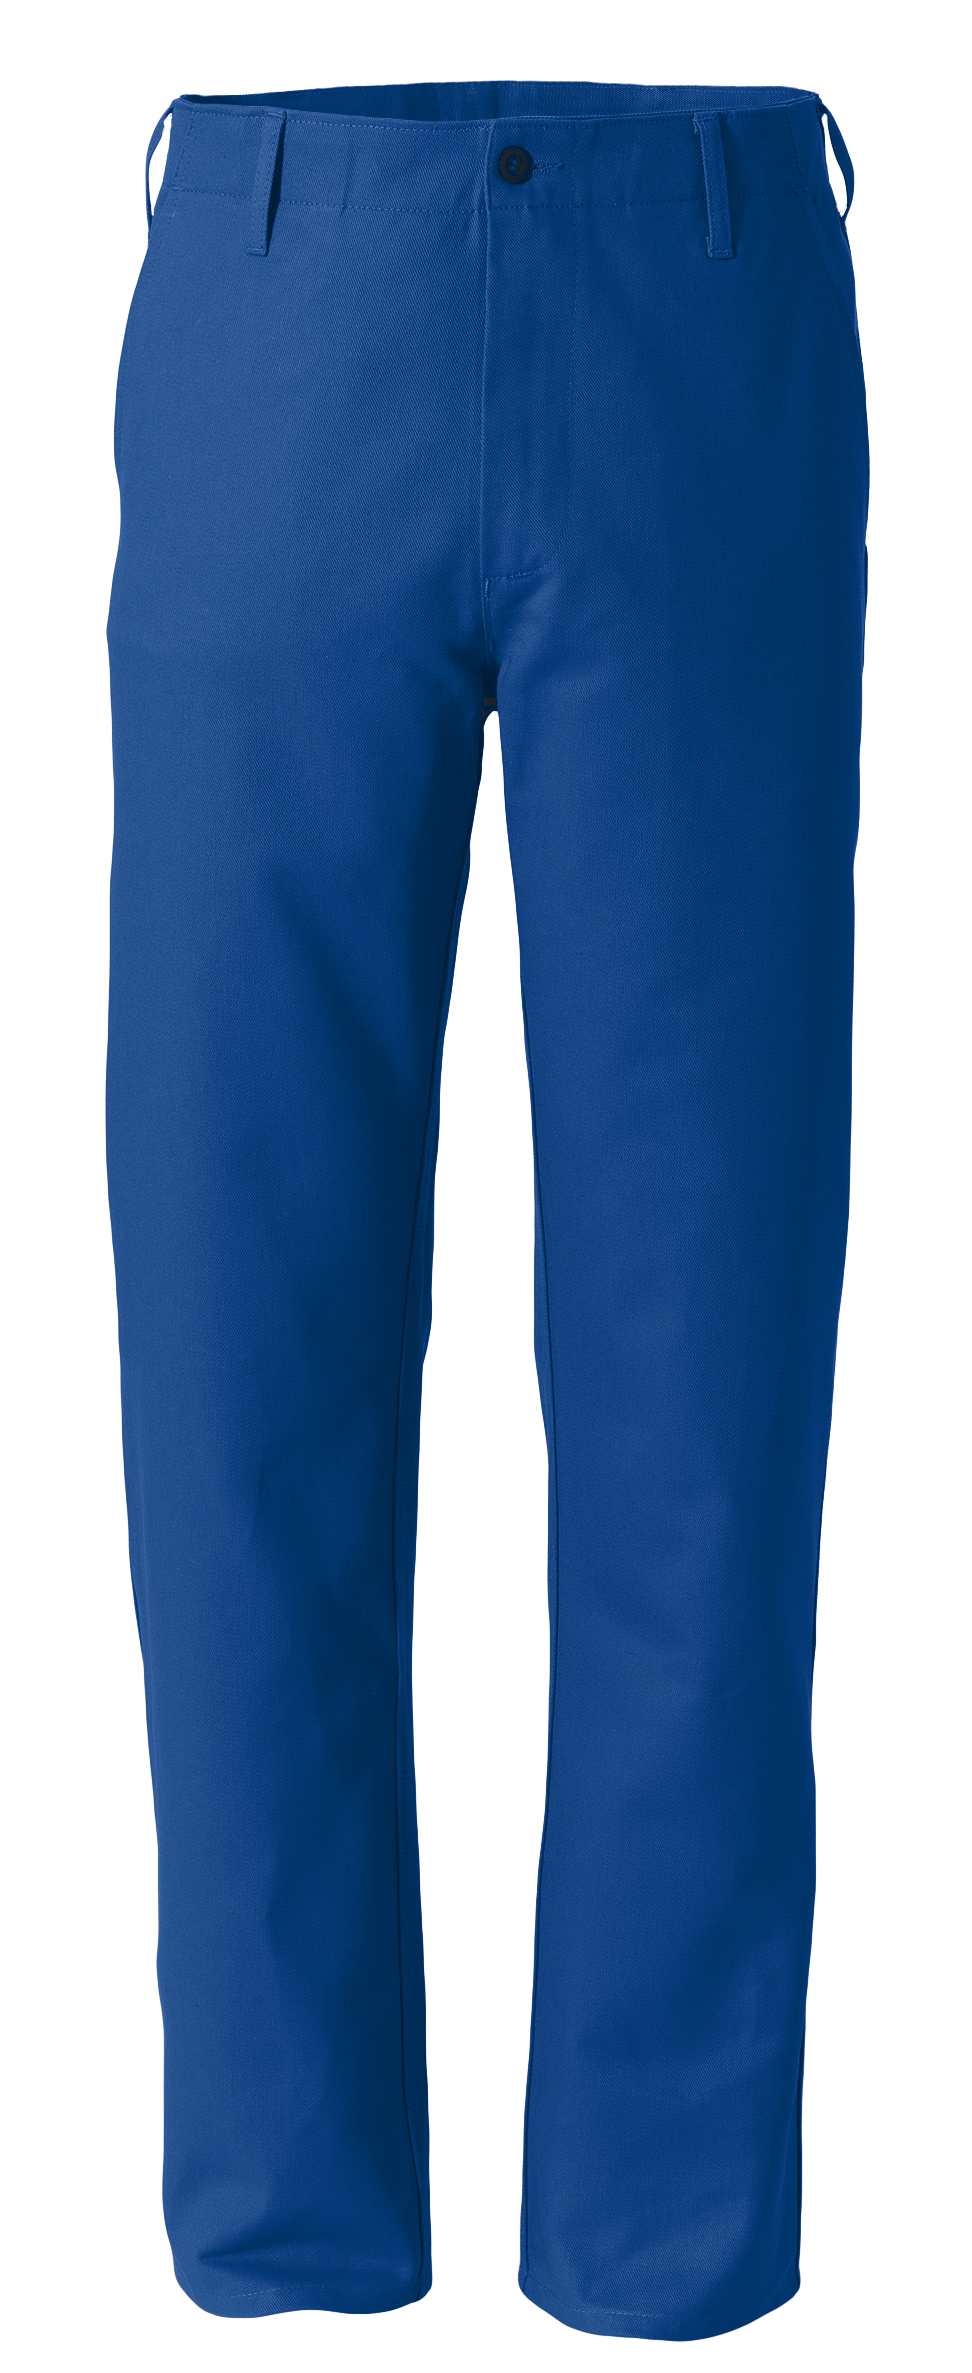 ROFA Bundhose Arbeitshose Berufshose Workerhose Arbeitskleidung Berufskleidung kornblau ca 360 g